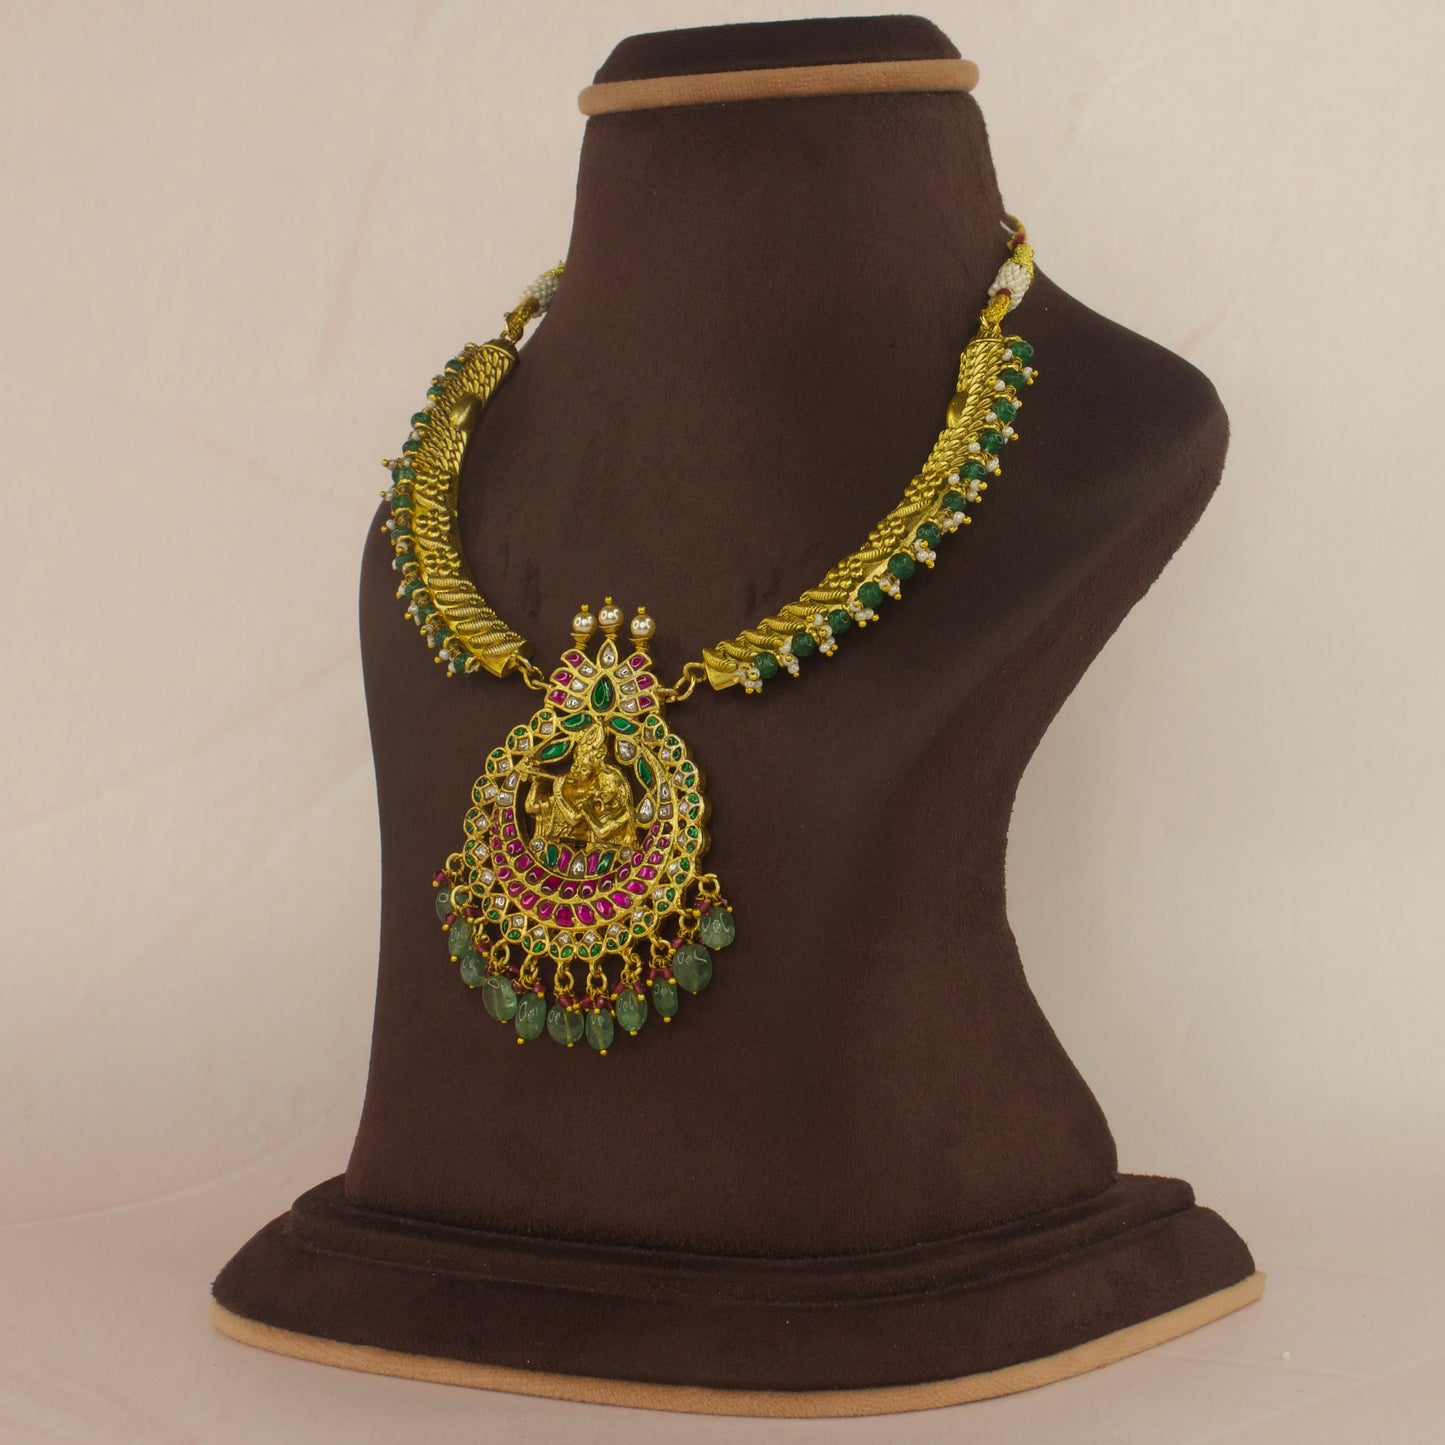 Exquisite Jadau Kundan Kanti Necklace with Detailed Pendantwith 22k gold plating. this product belongs to jadau kundan jewellery category